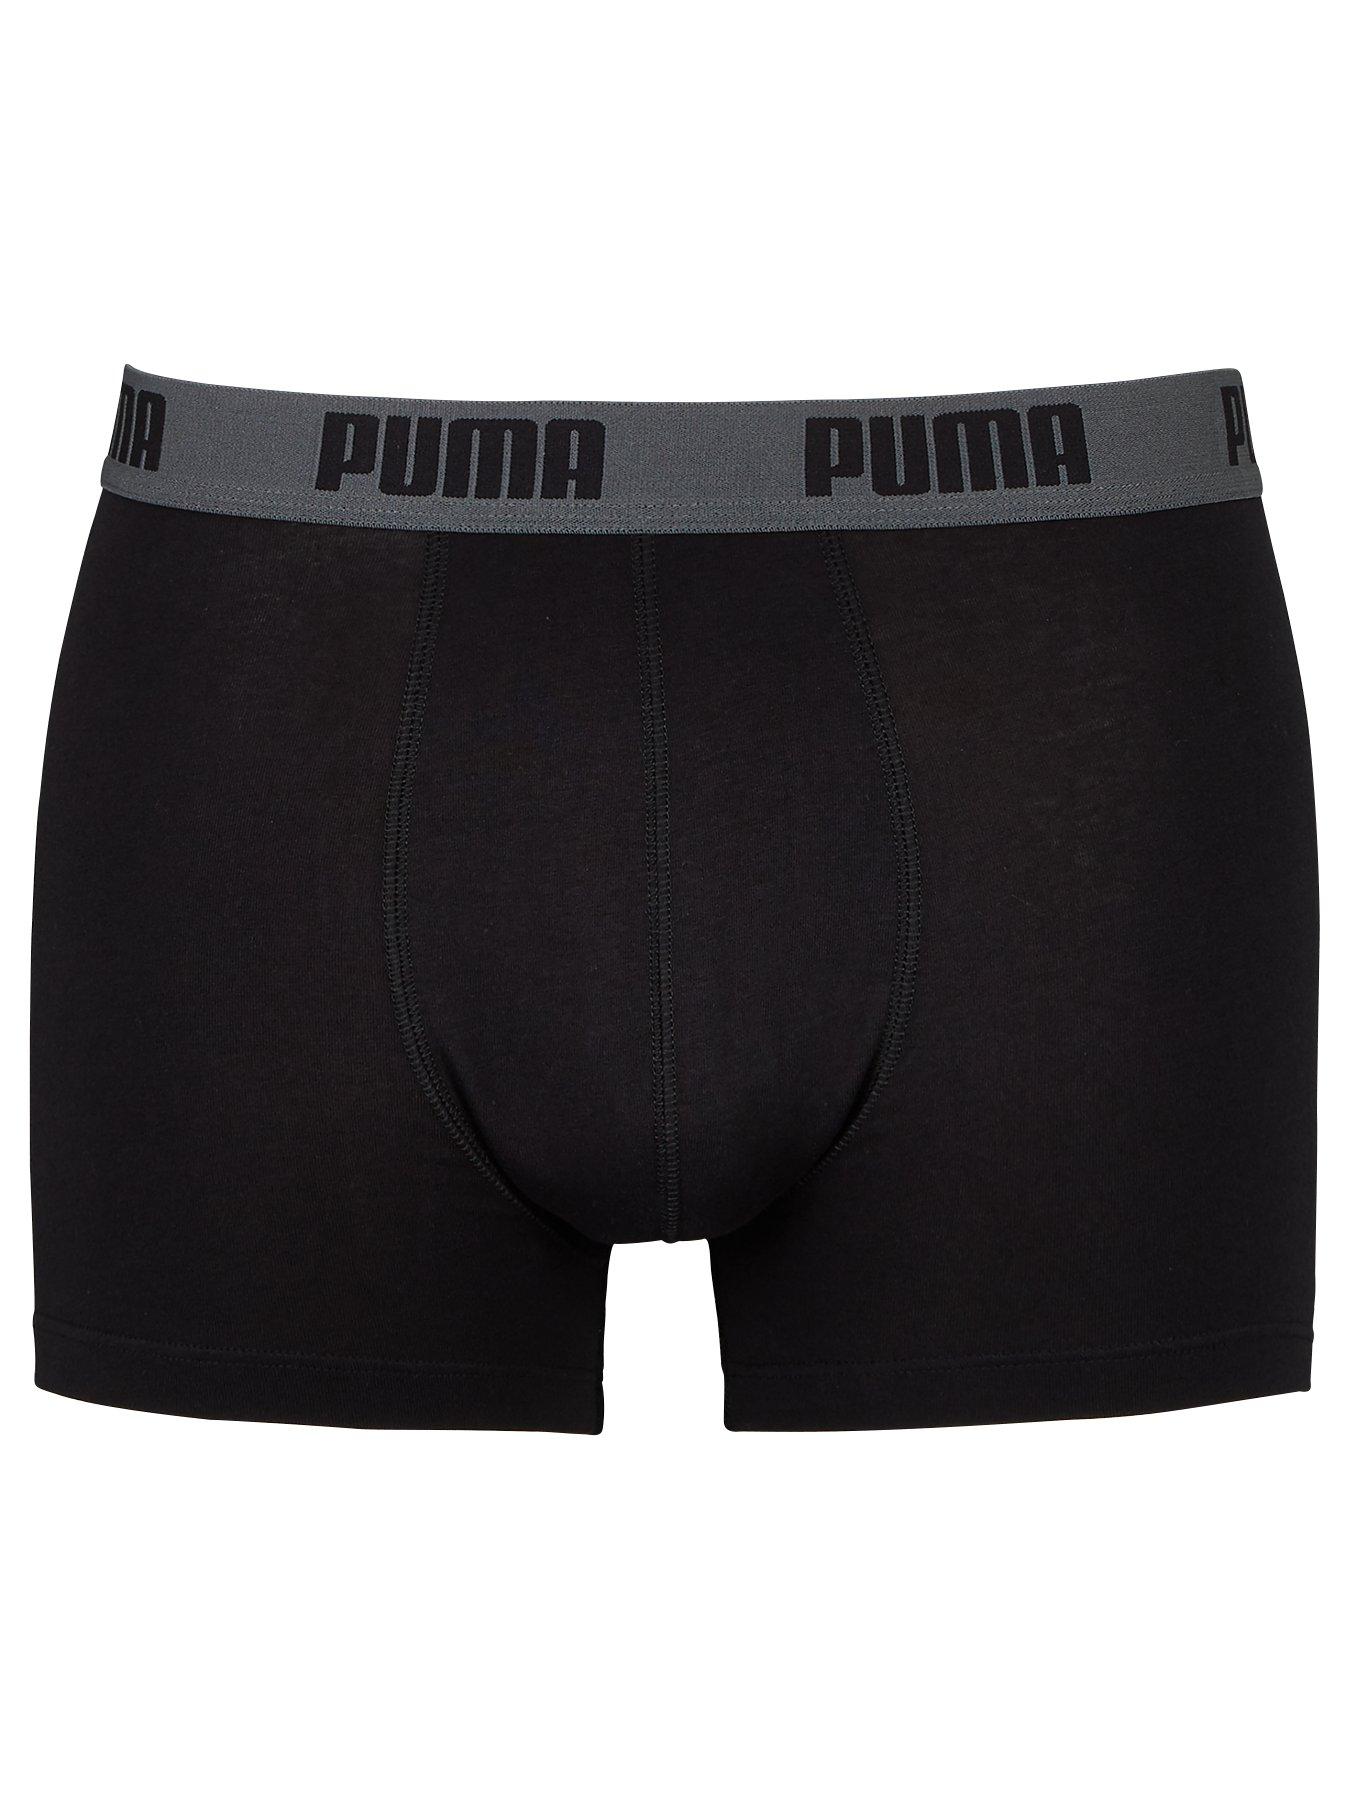 puma boxer shorts 2 pack